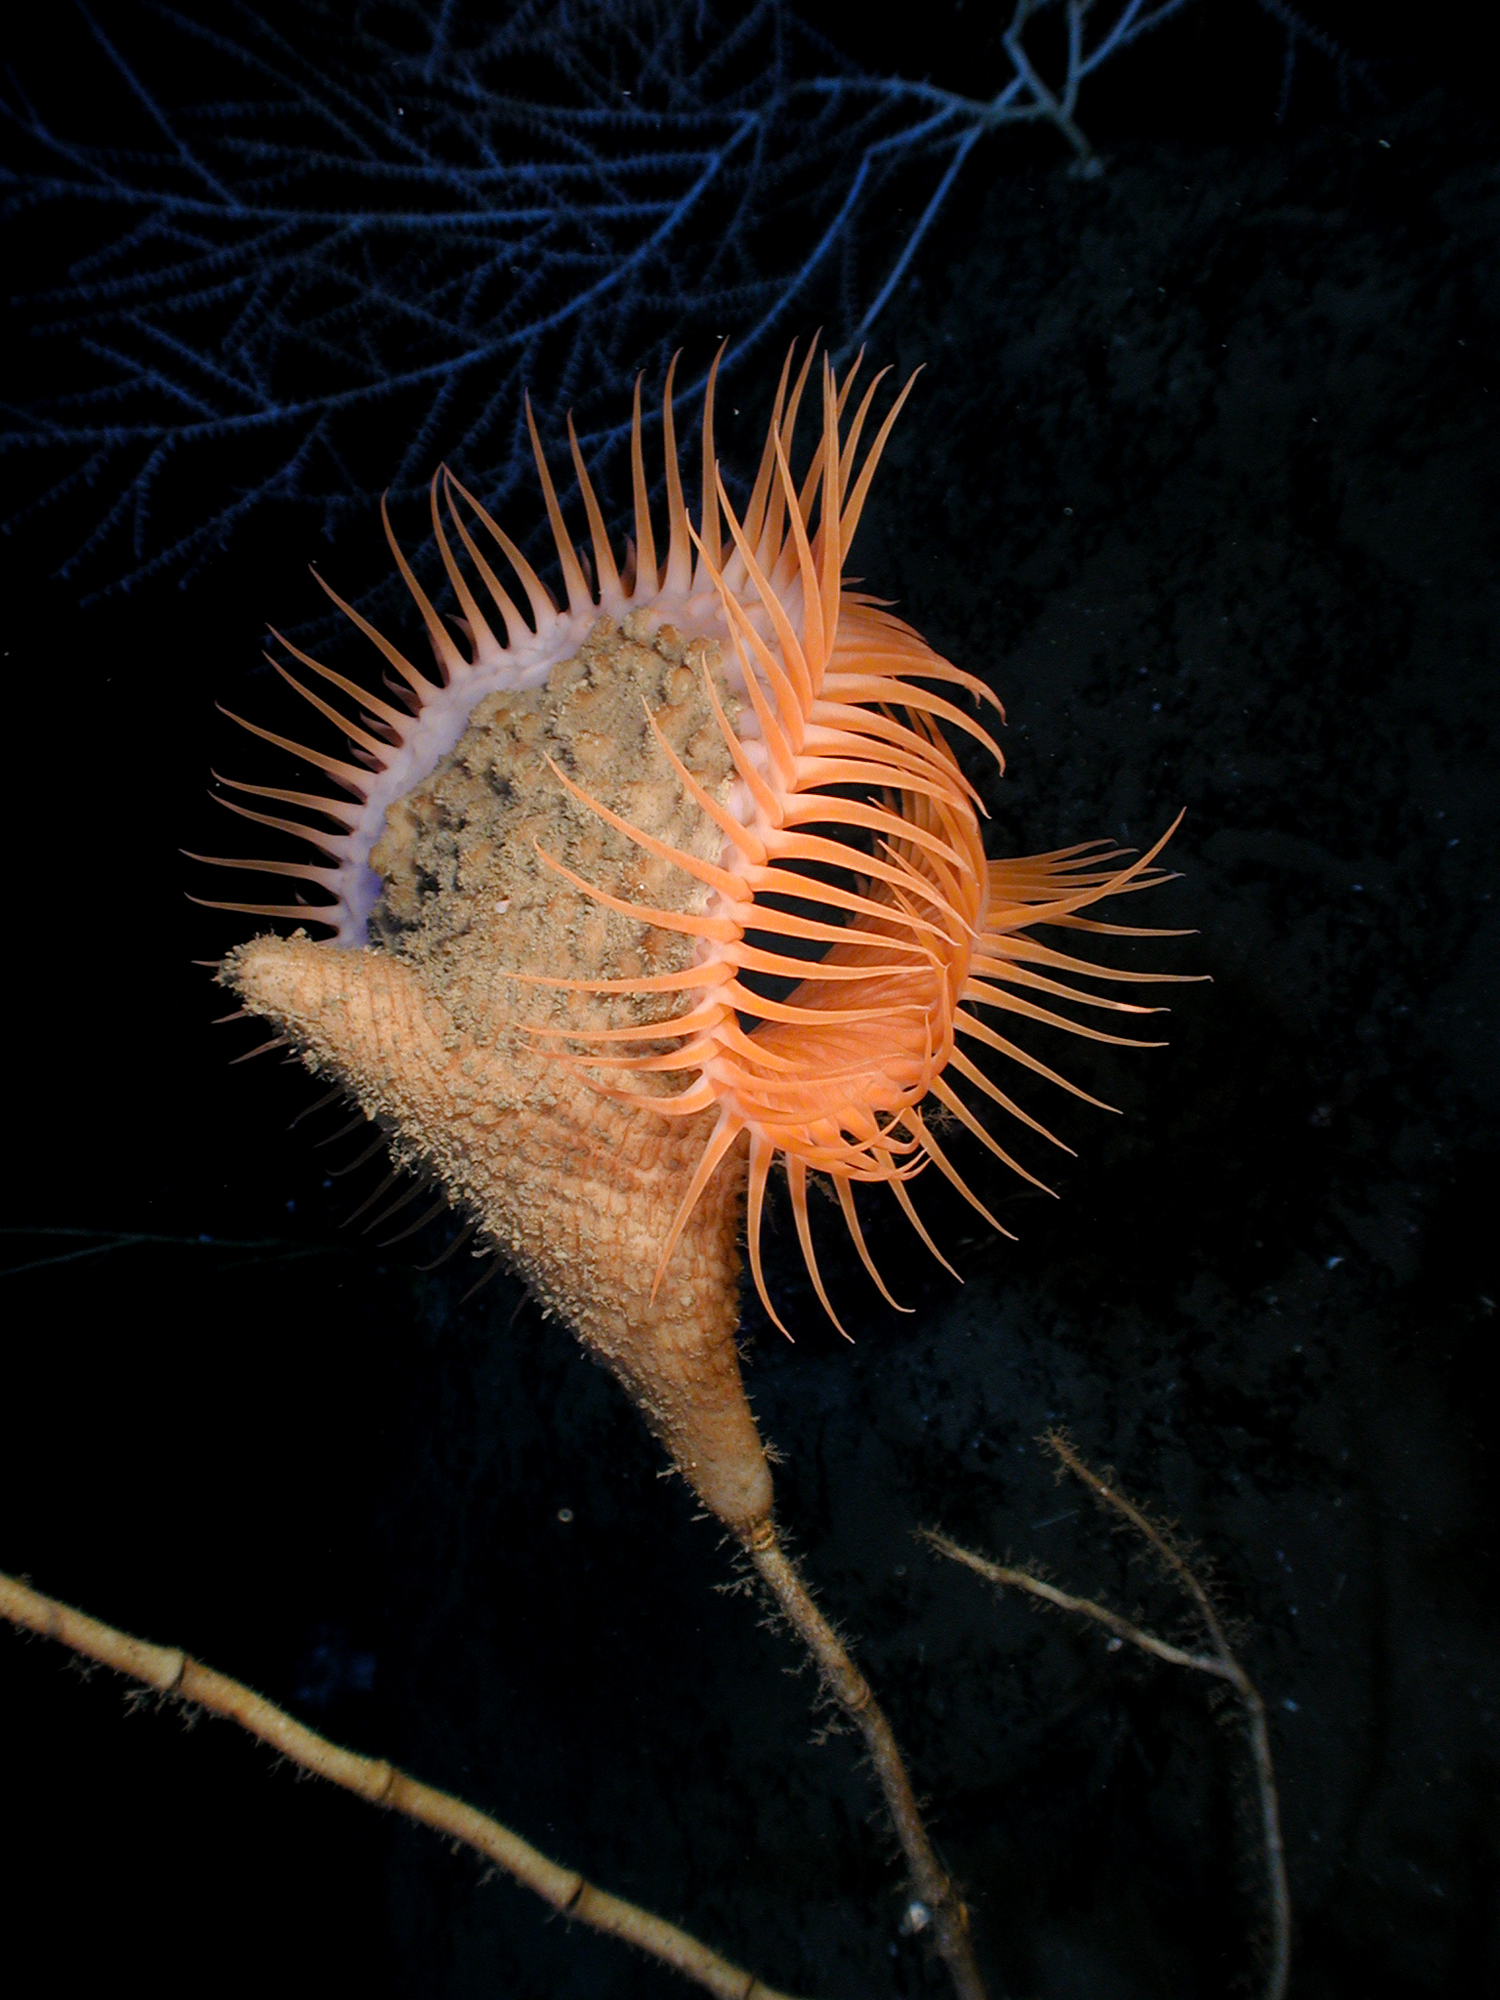 Sea anemone - Wikipedia